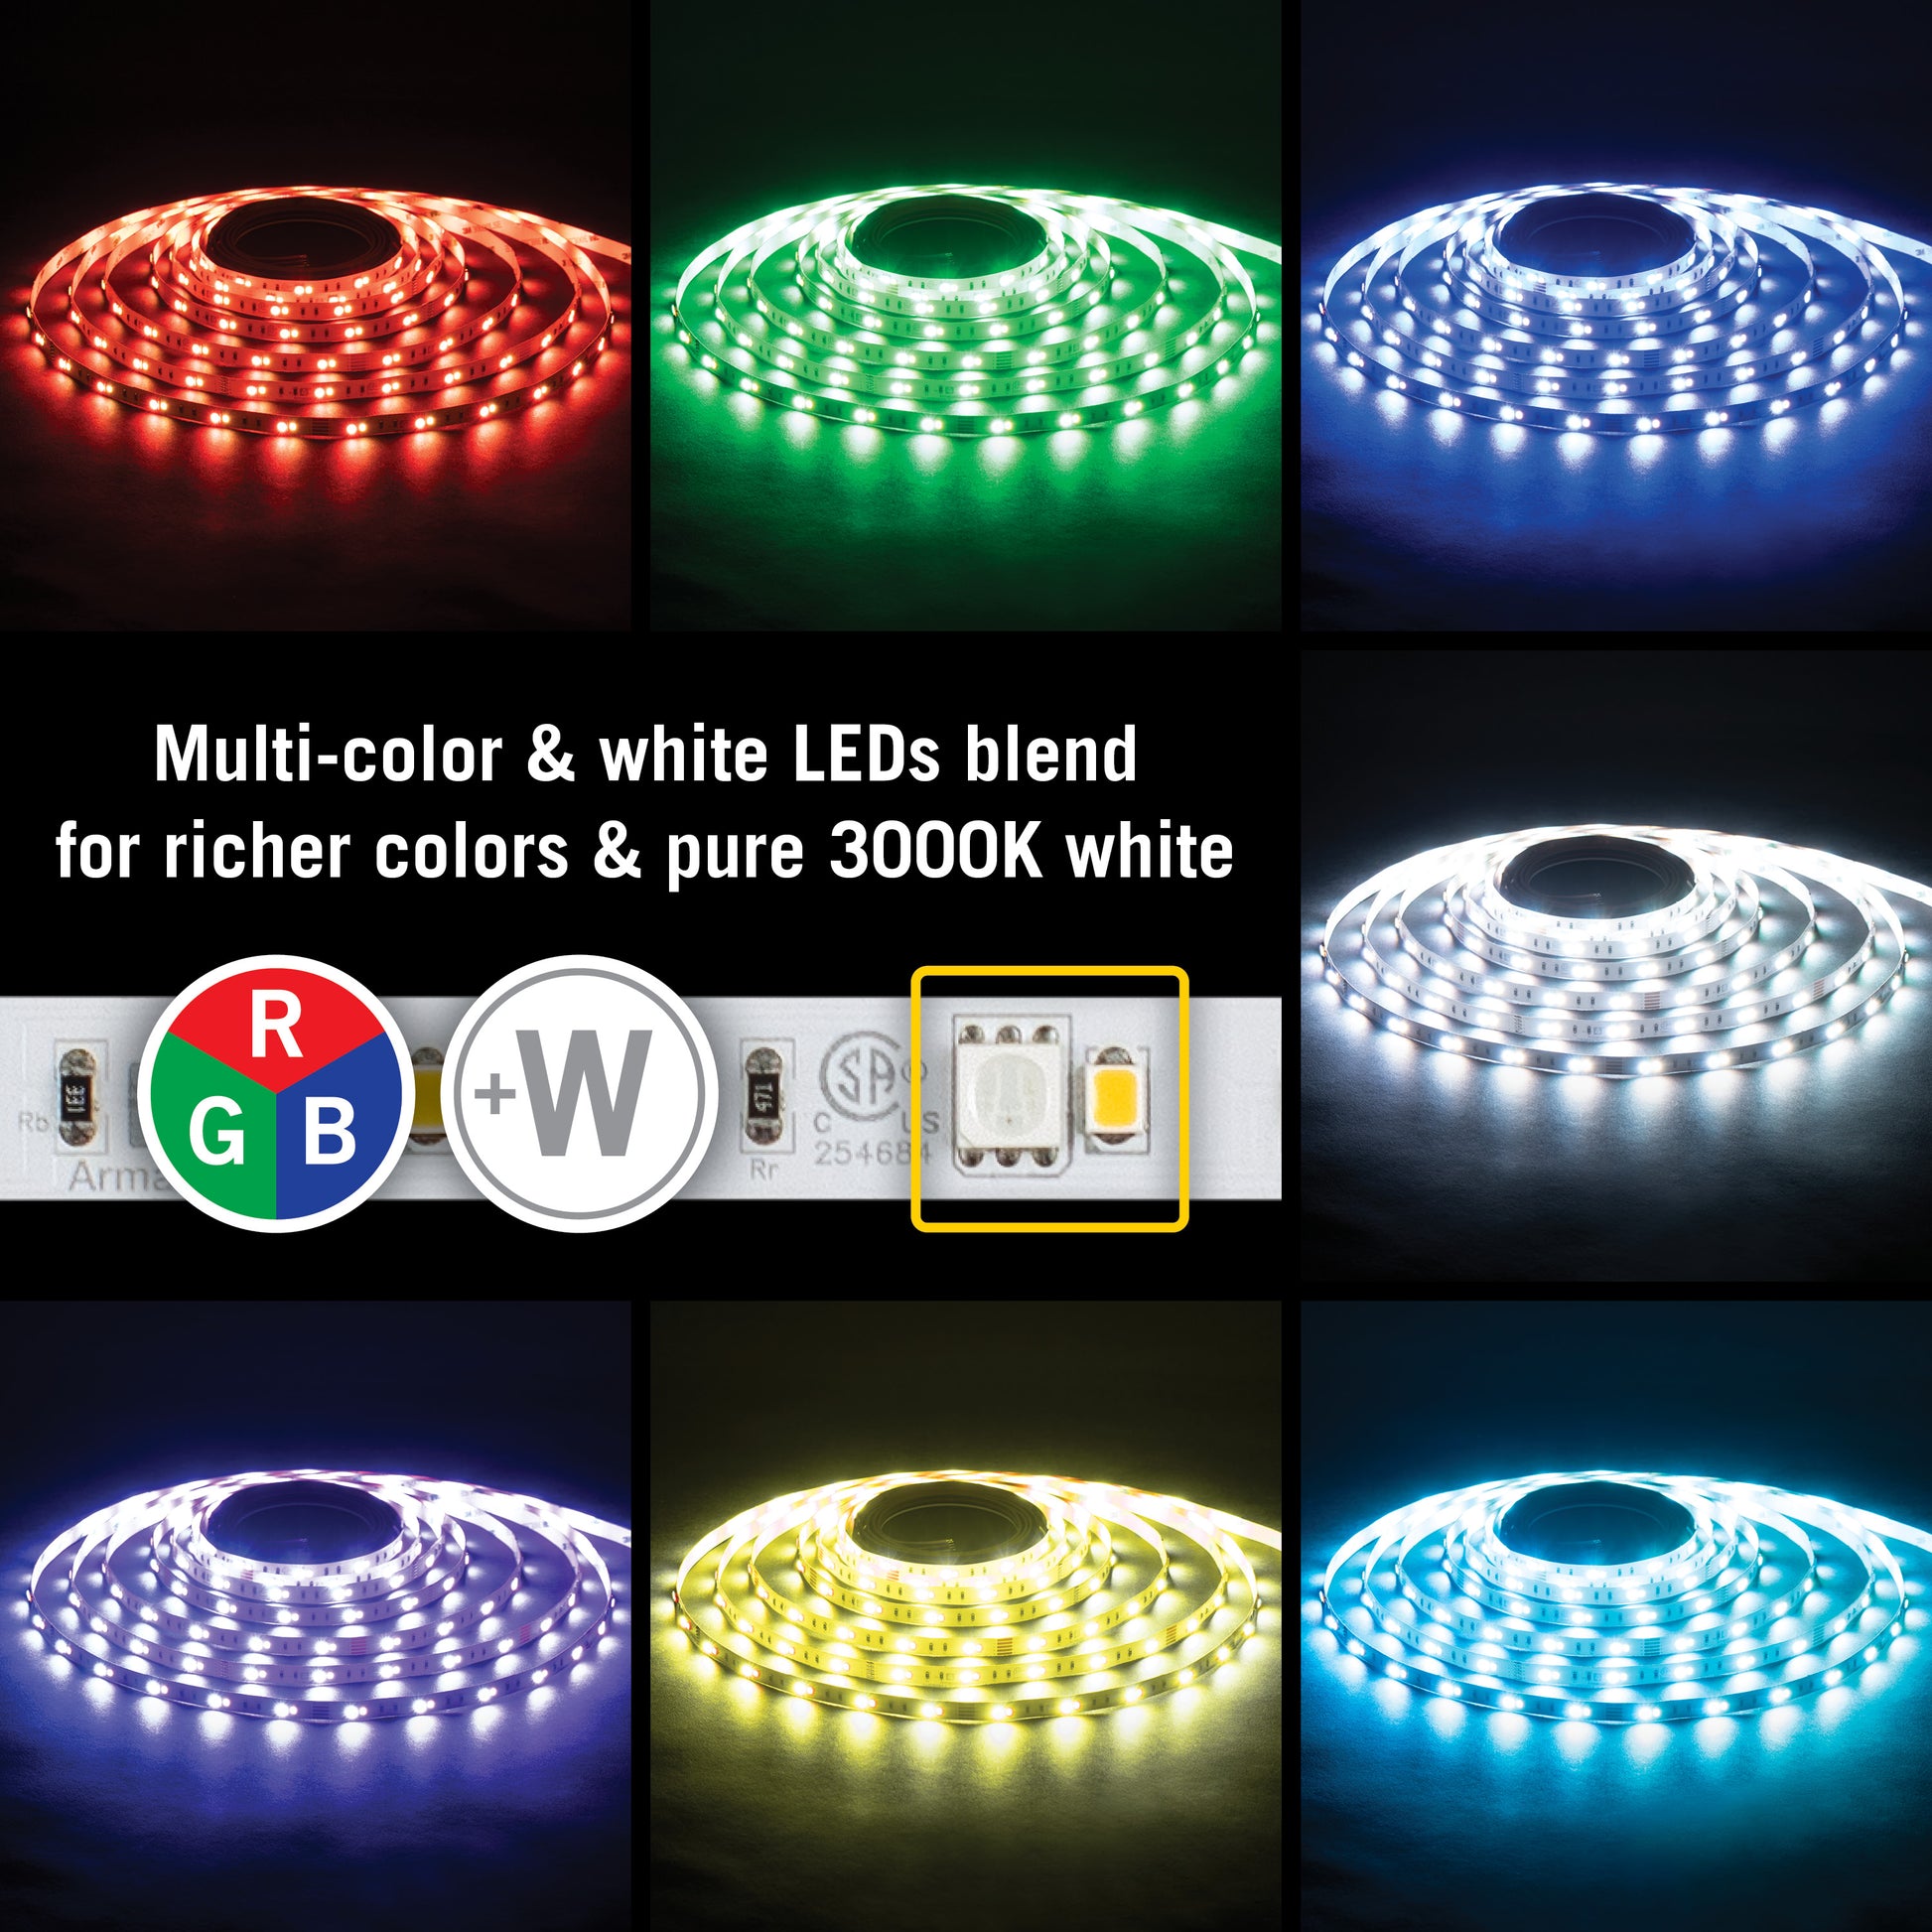 Armacost Lighting Proline Multi-Color RGB LED Remote Control